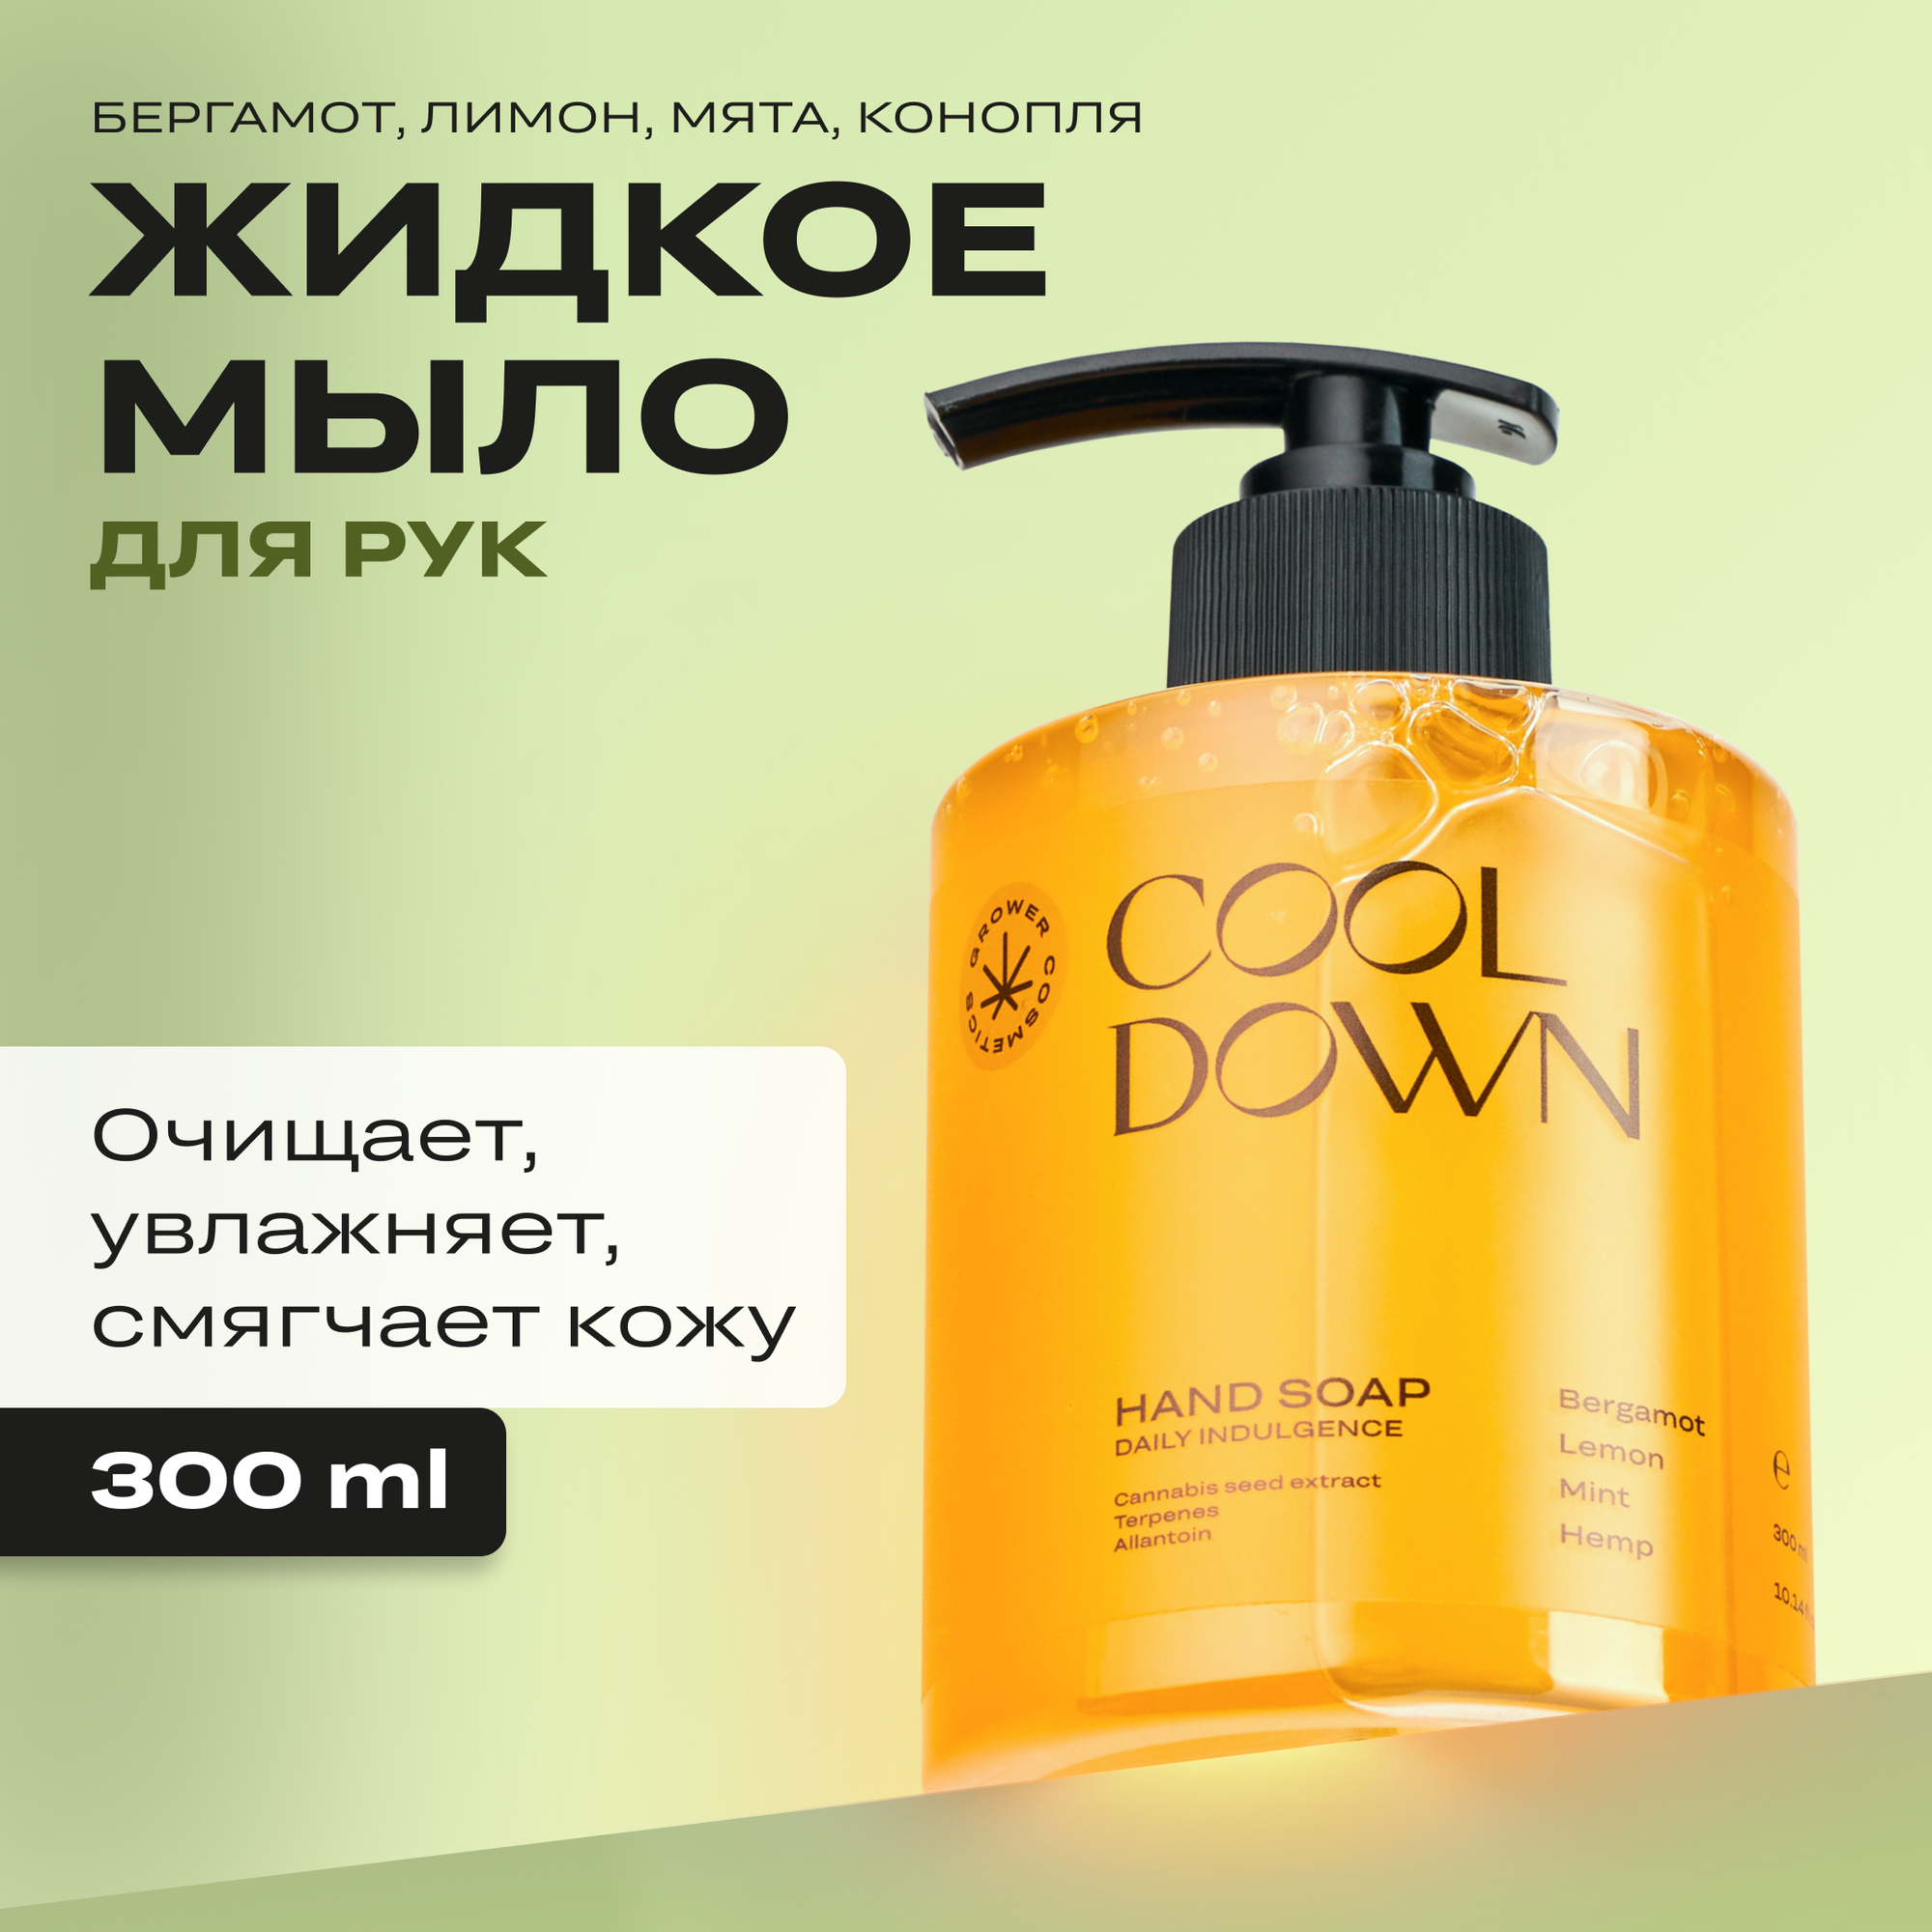 Жидкое мыло Grower cosmetics "COOL DOWN" Бергамот, Лимон, Мята, Конопля. 300мл